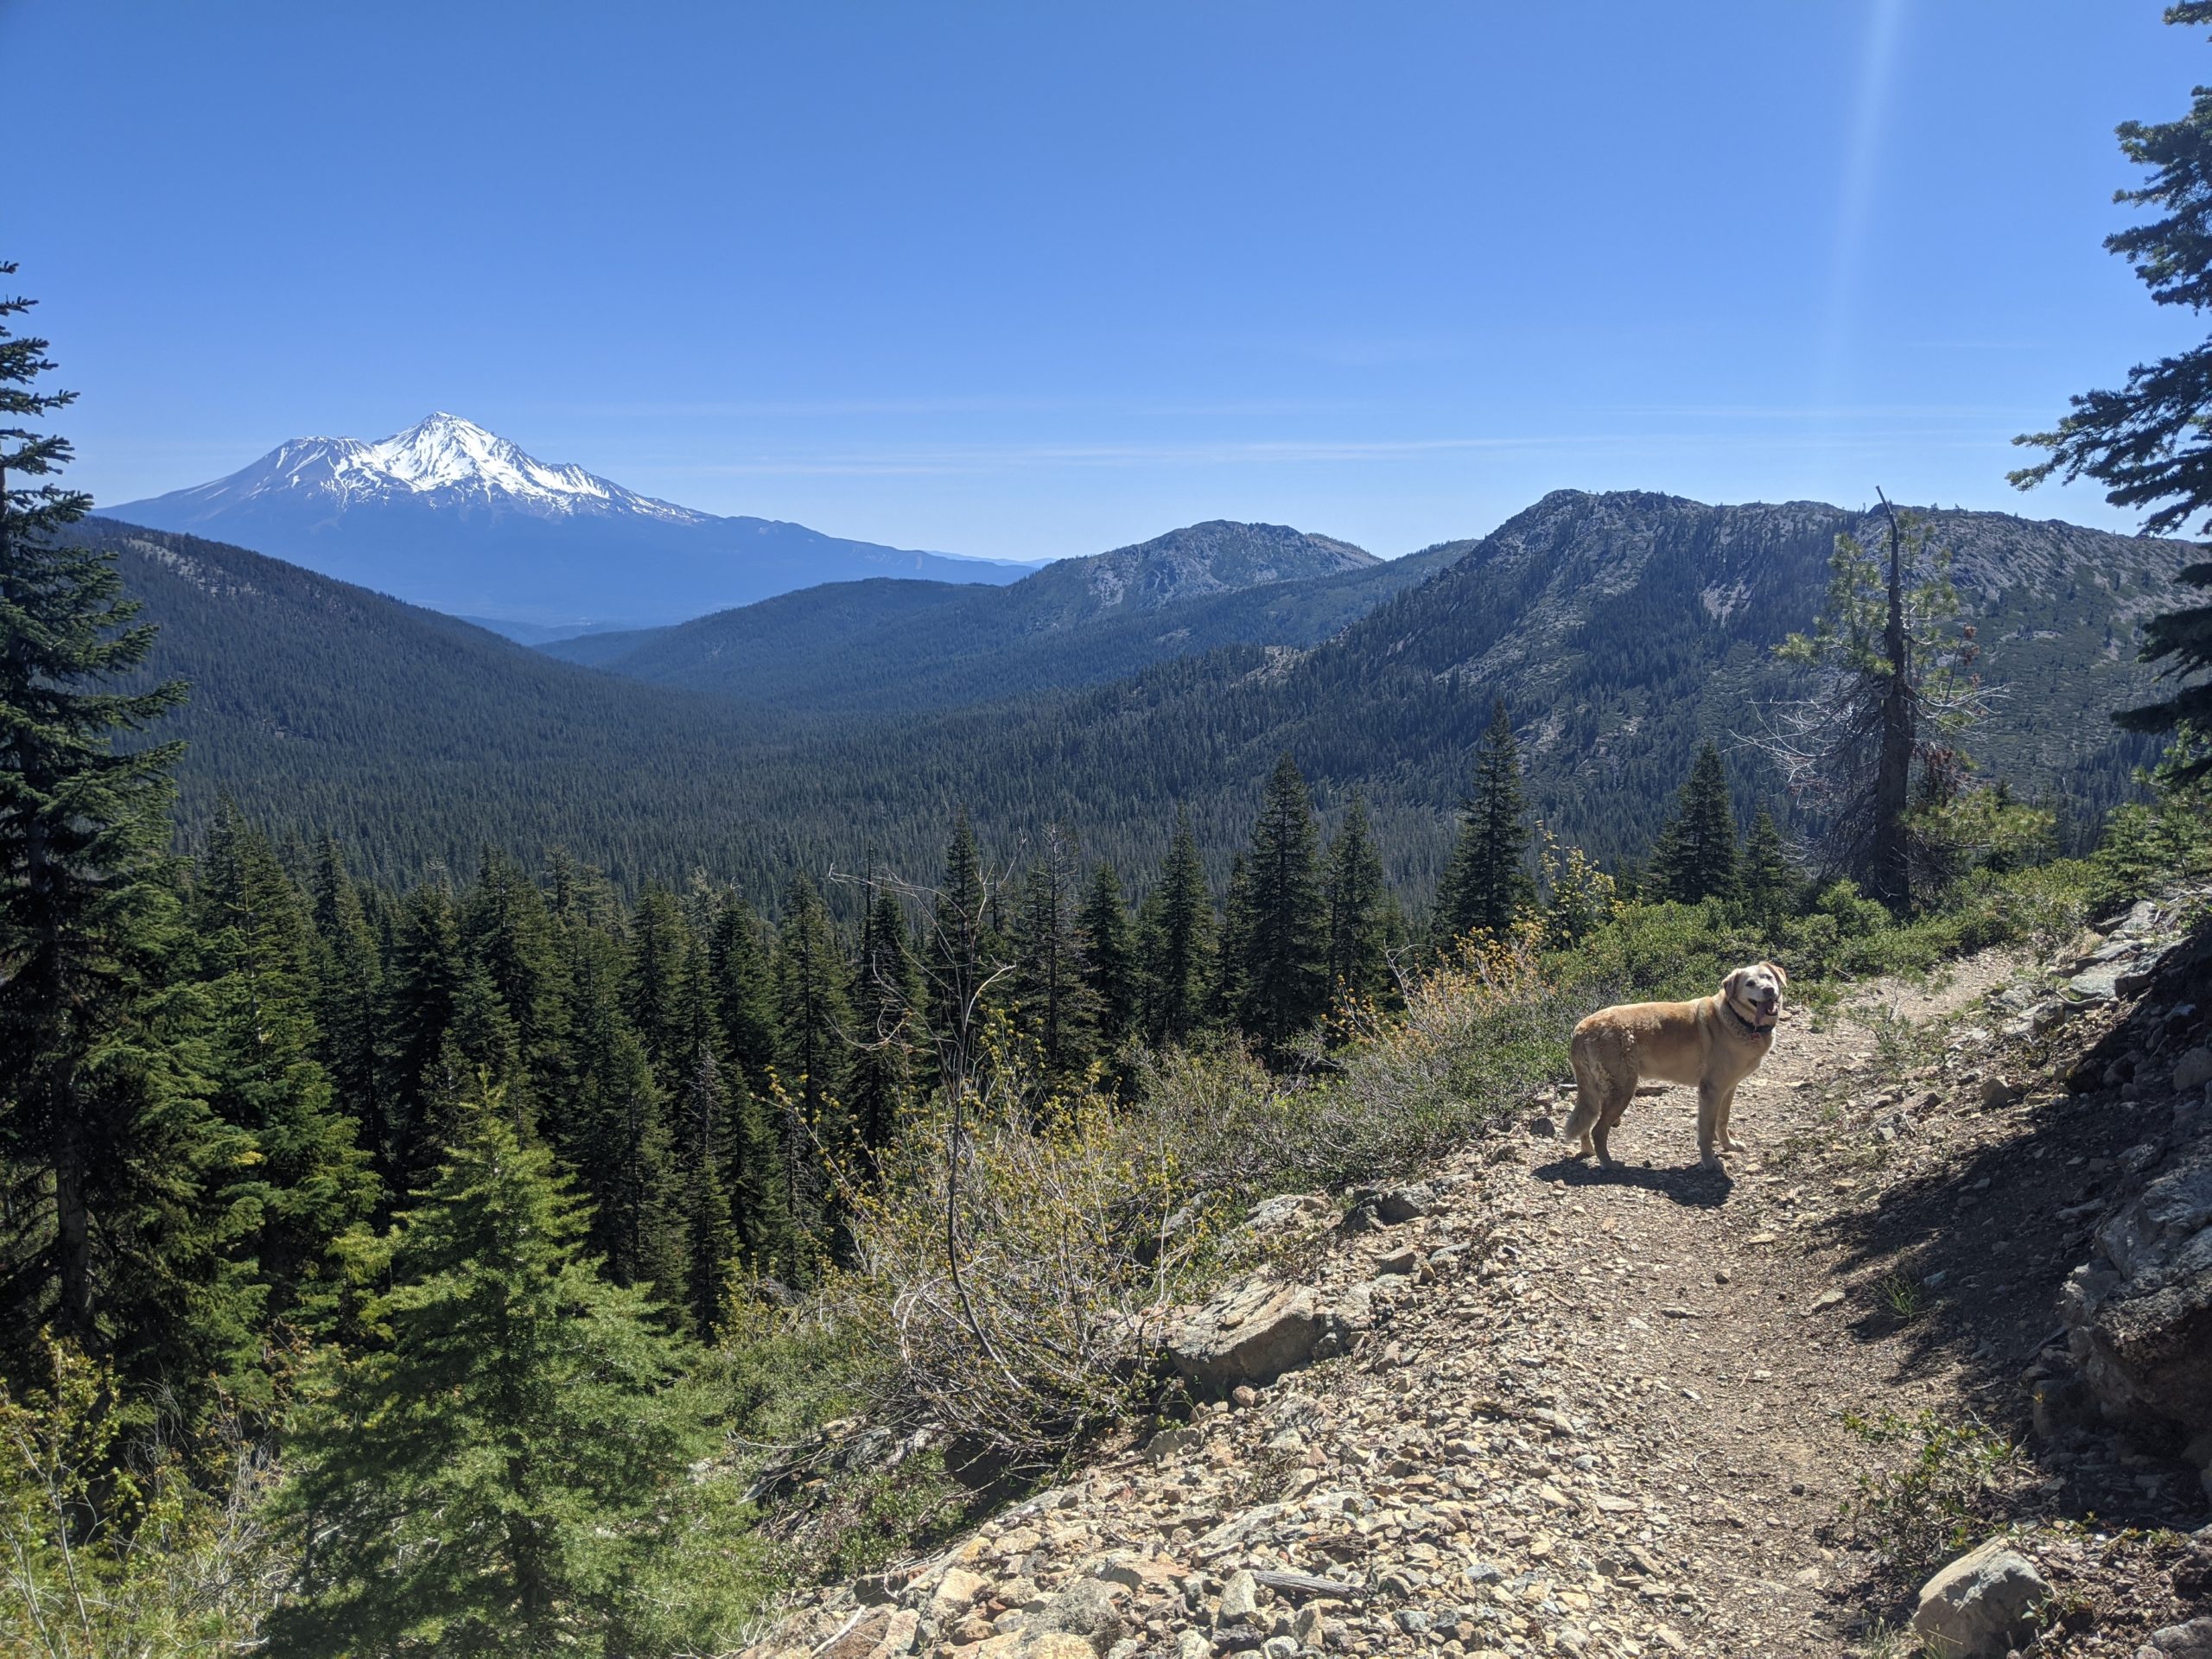 Dog on trail at Mount Shasta